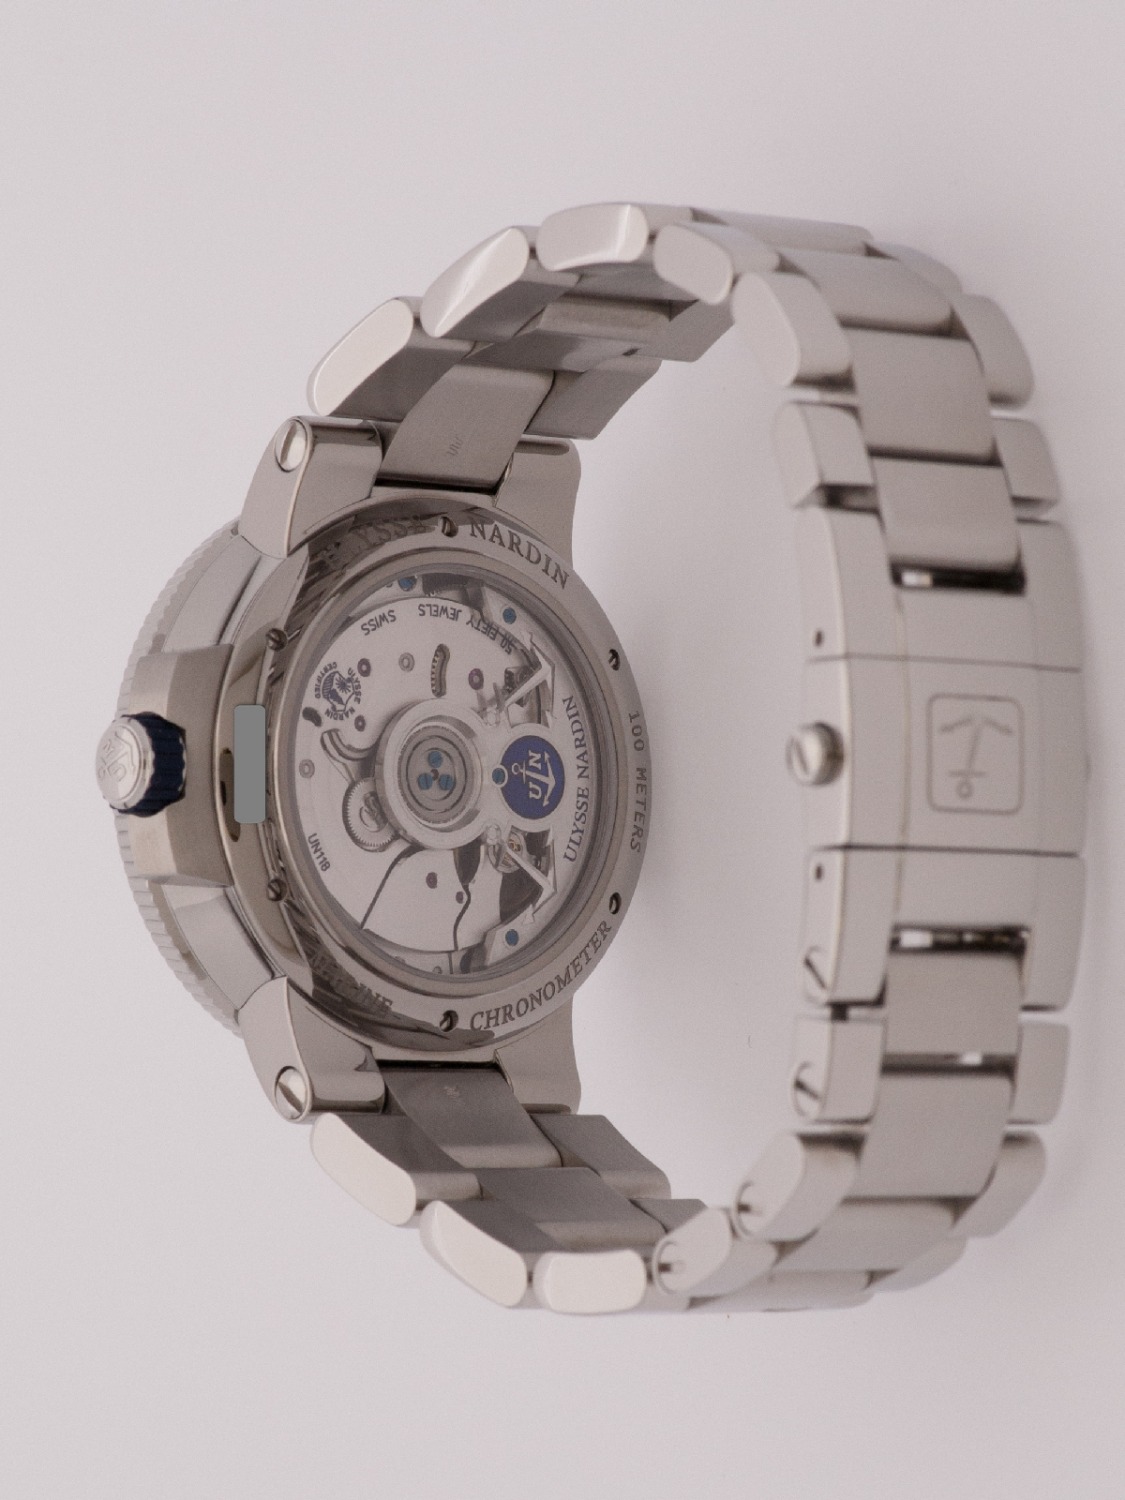 Ulysse Nardin Marine Chronometer watch, silver